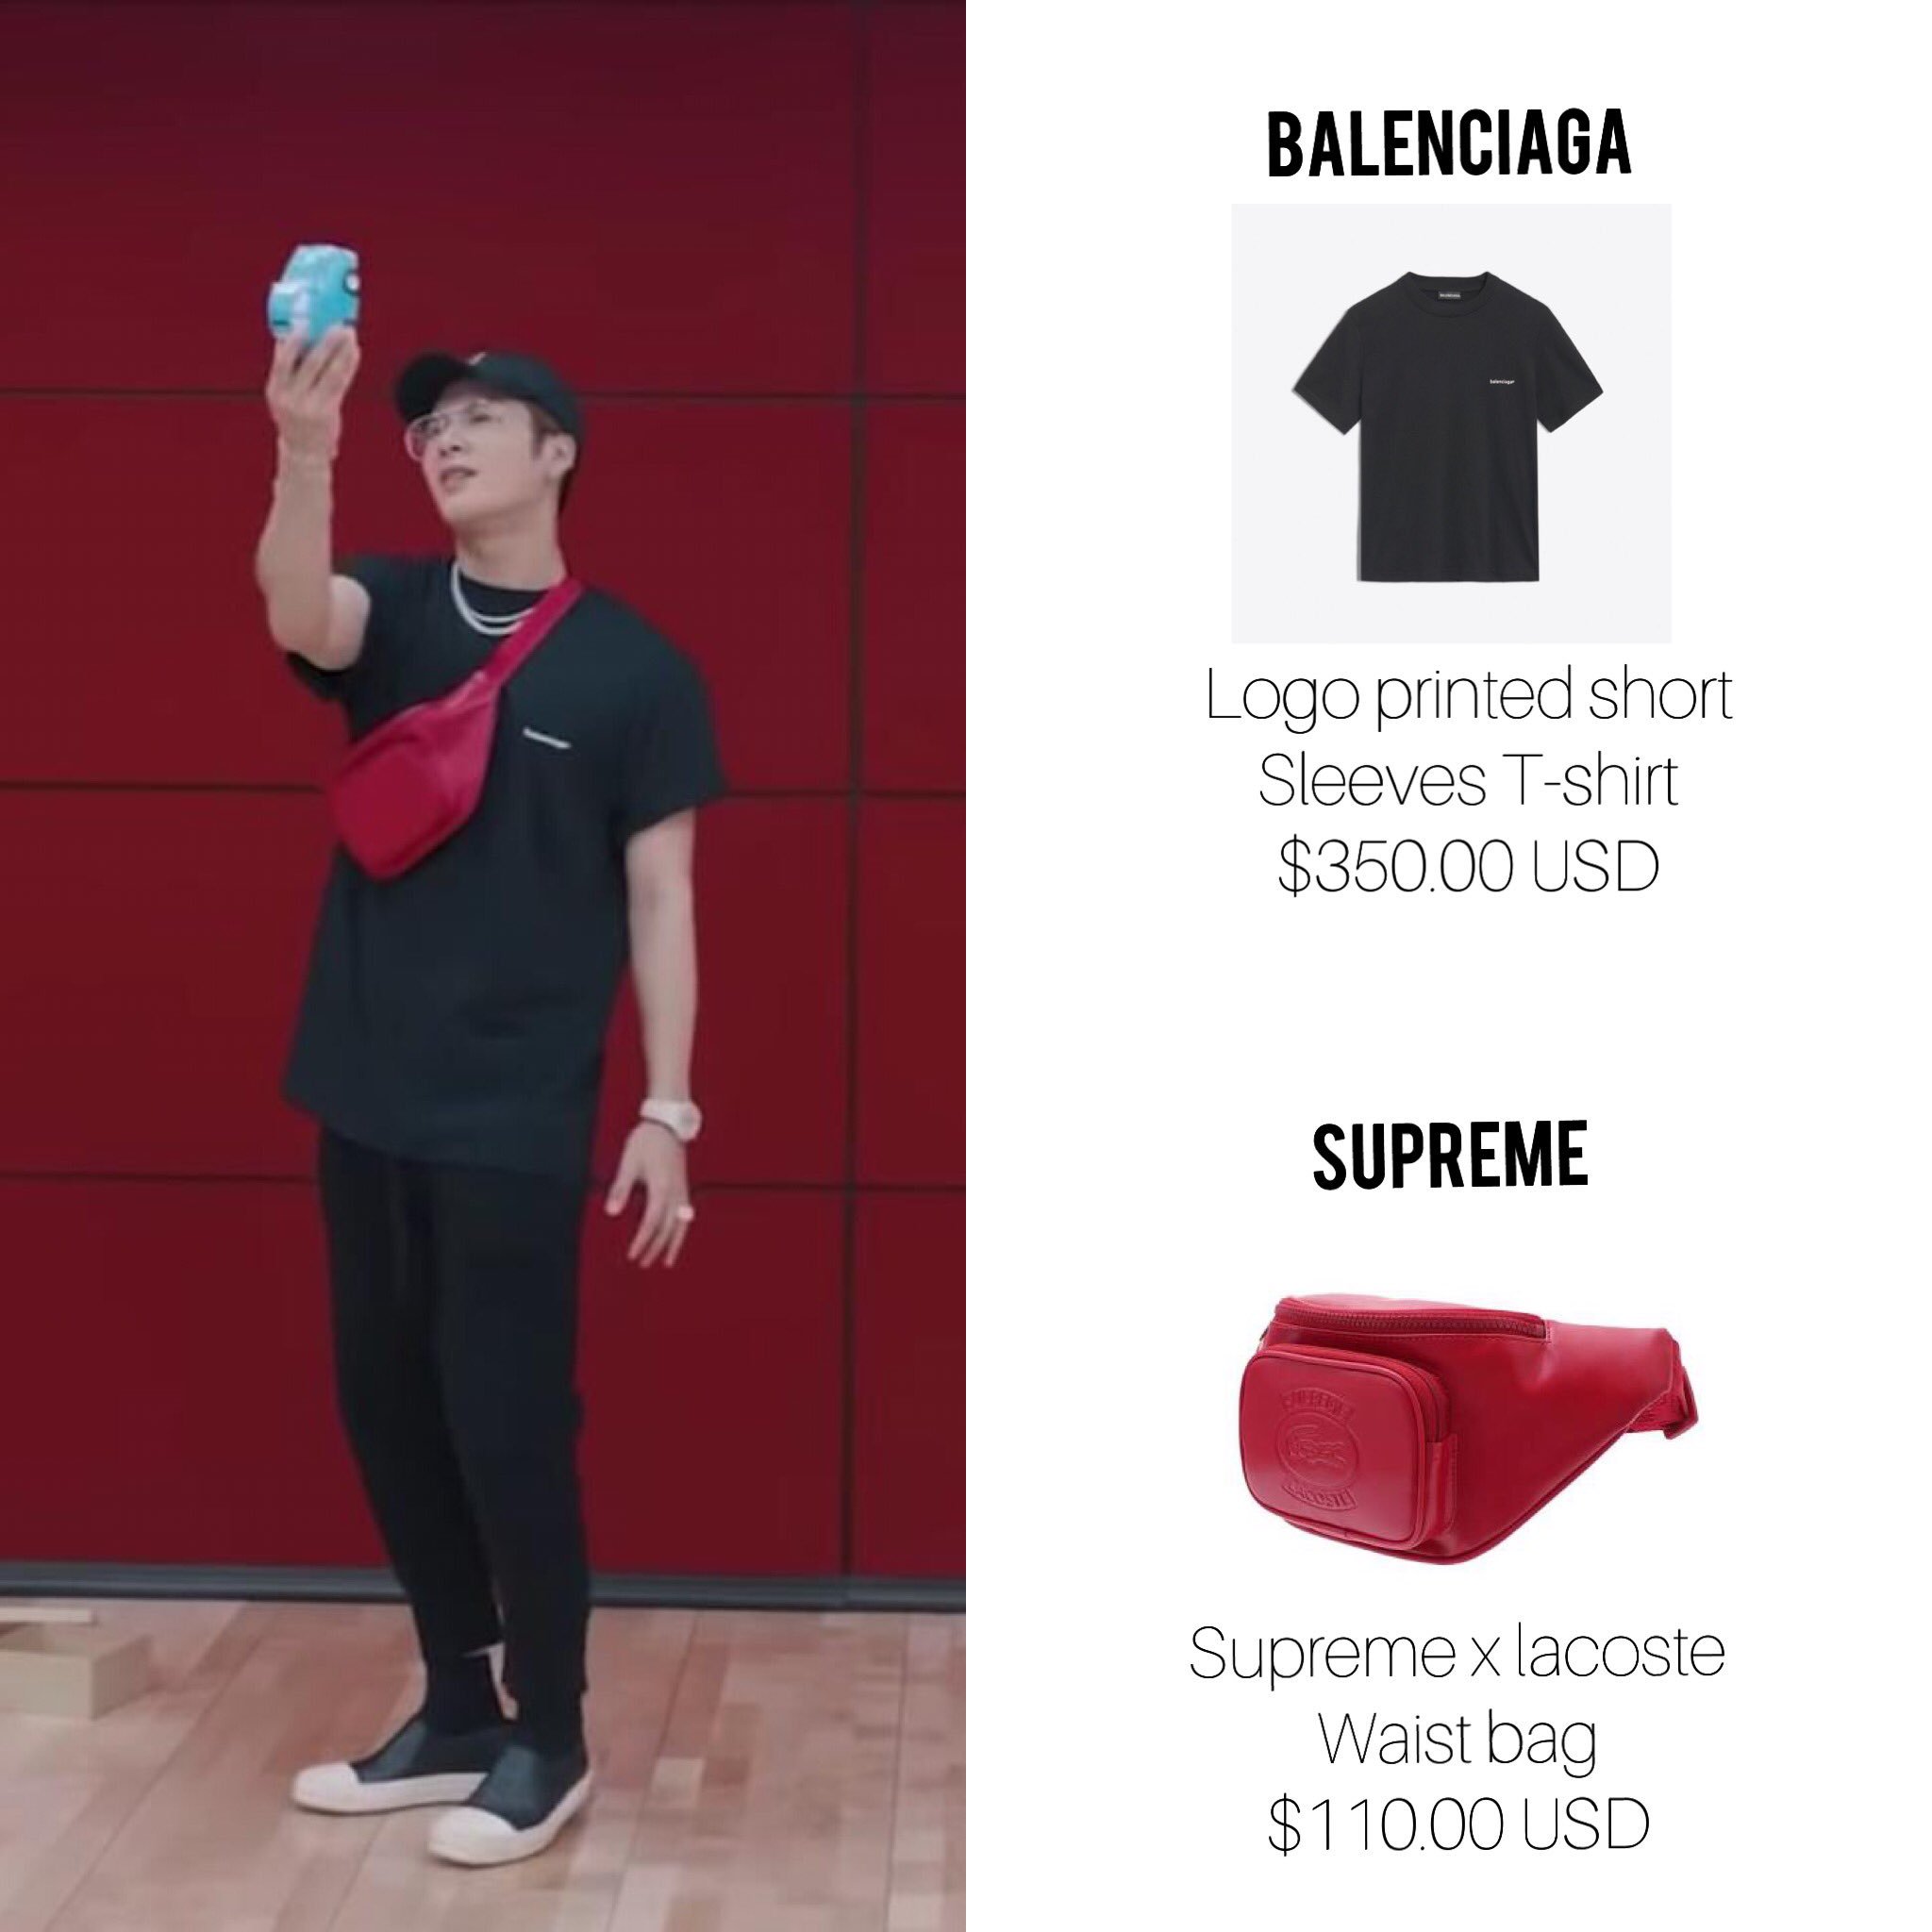 jacksonwears on Twitter: ". 20180919 Top : Balenciaga Logo printed short  sleeves T-shirt $350.00 USD Bag : Supreme Supreme x Lacoste waist bag  $110.00 USD #jacksonwang #王嘉尔#王嘉爾https://t.co/HKWzCu1ns1" / Twitter